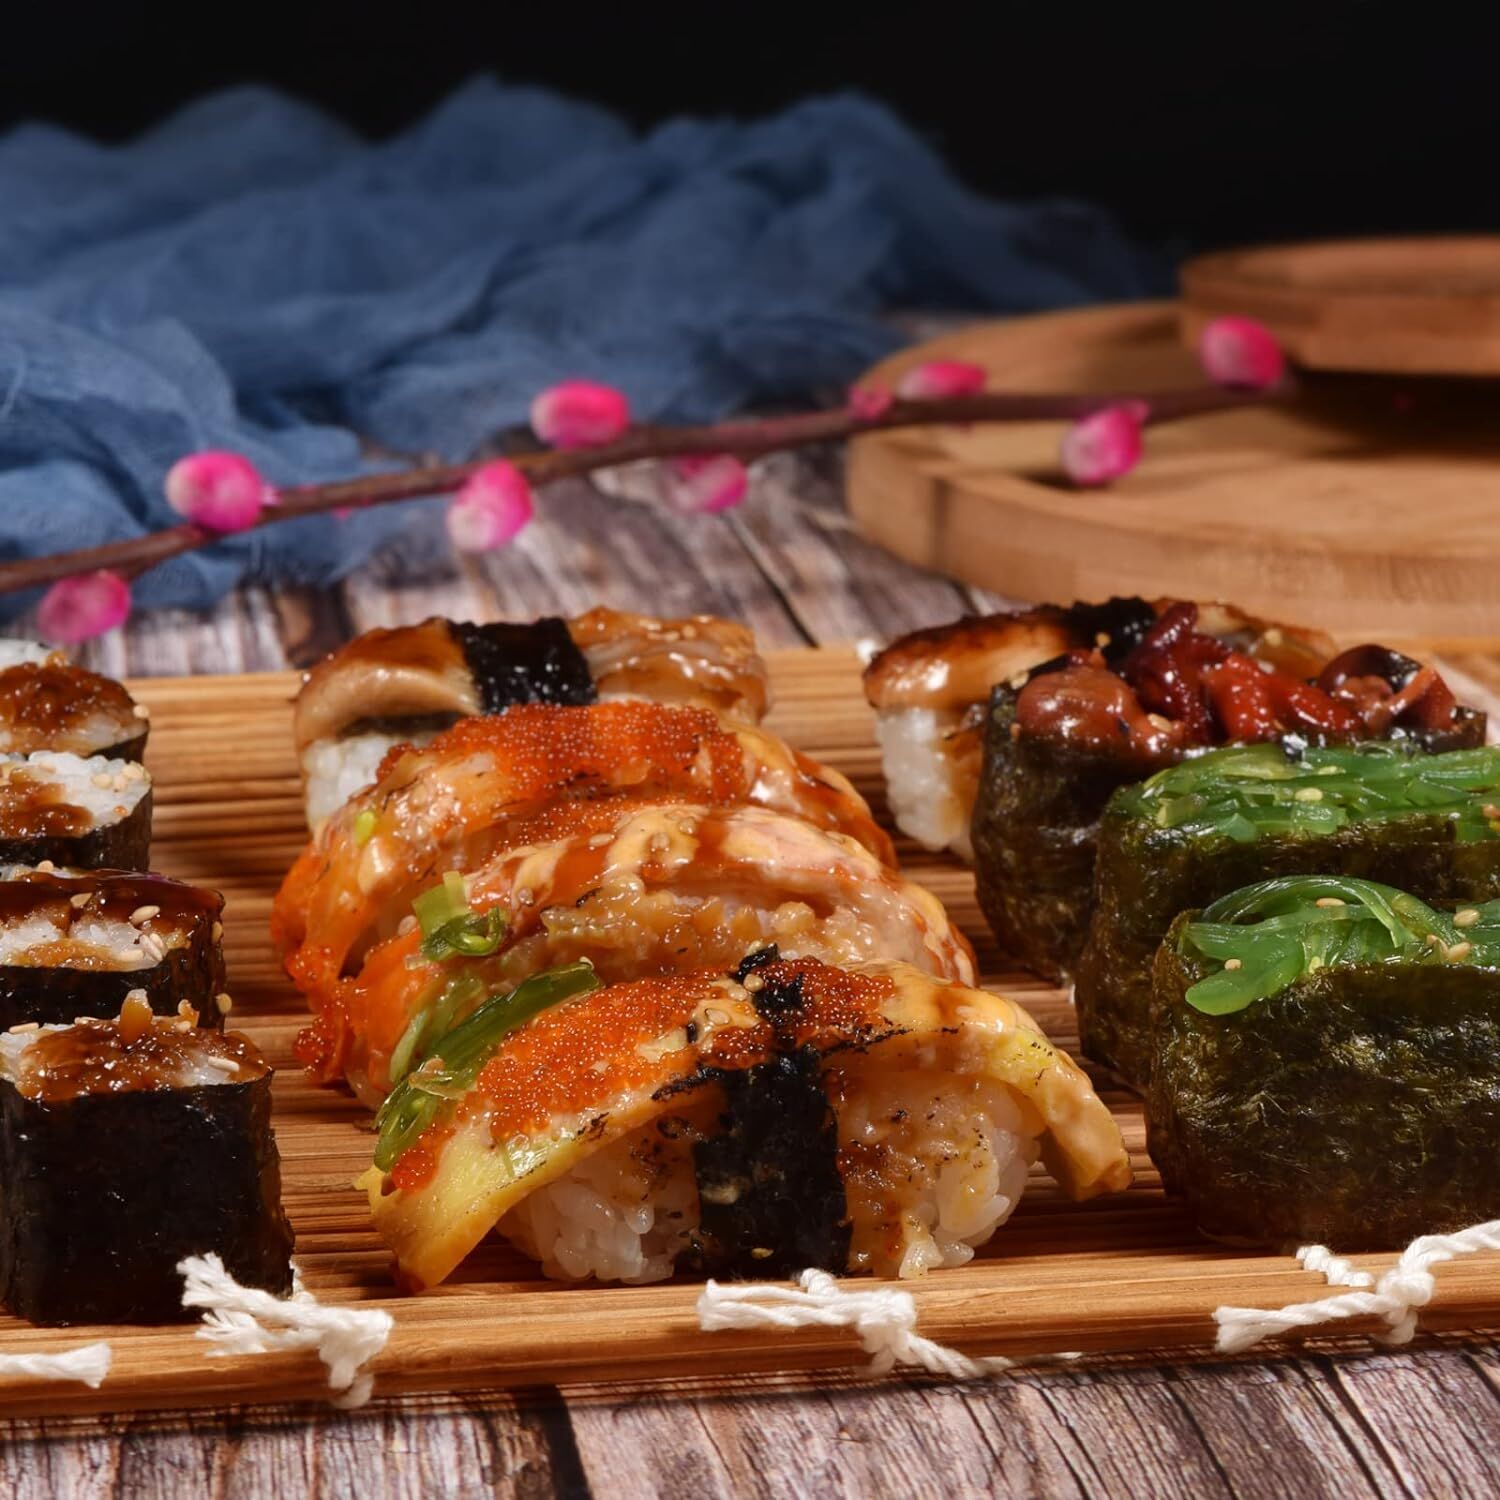 Sushi Machine: The Benefits